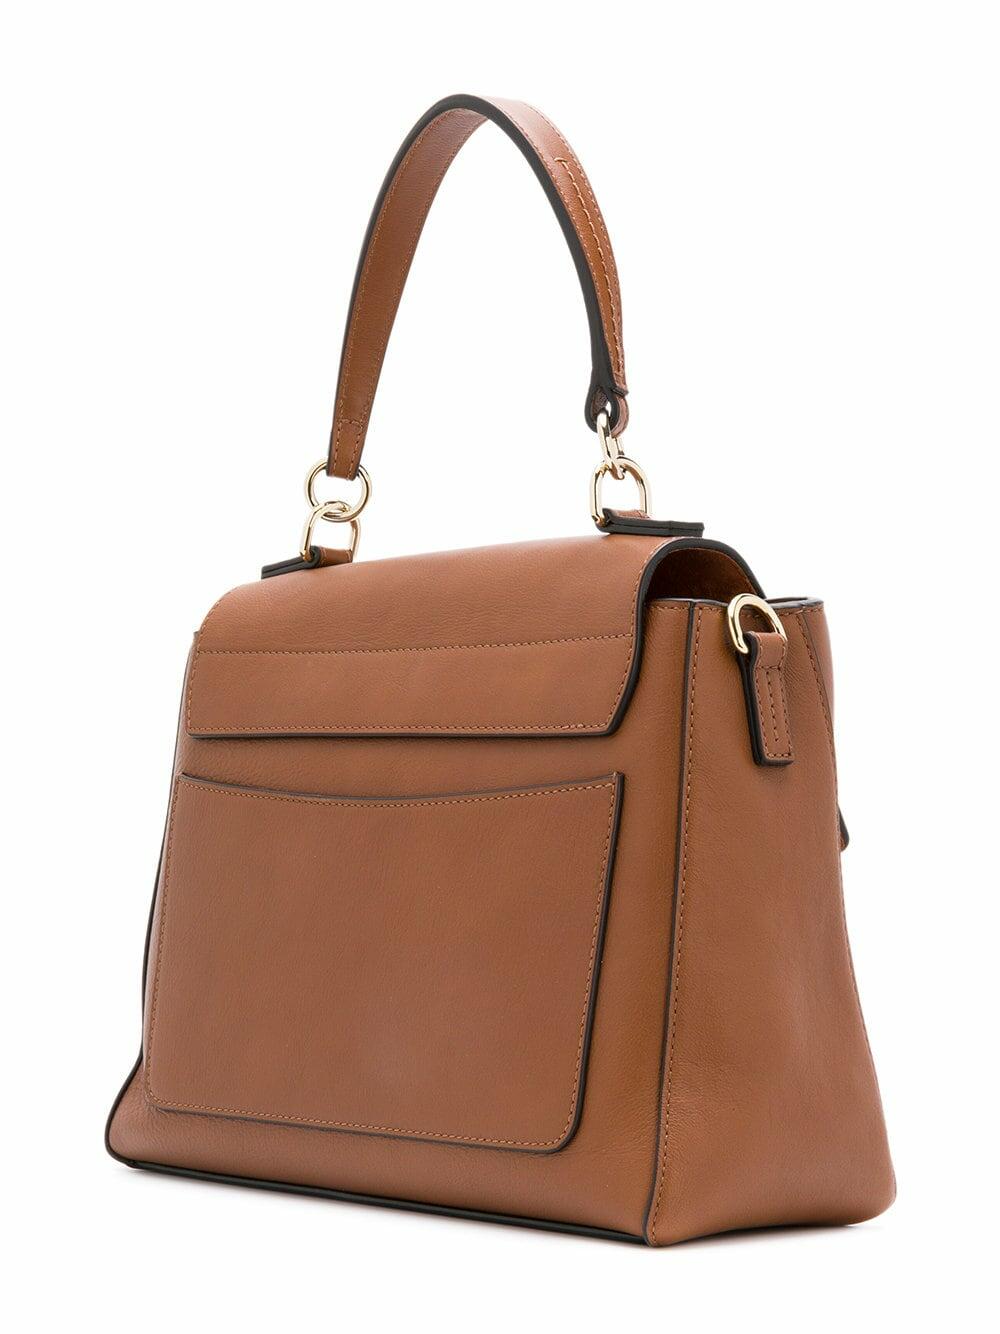 Chloé - Faye Tan Leather Shoulder Bag